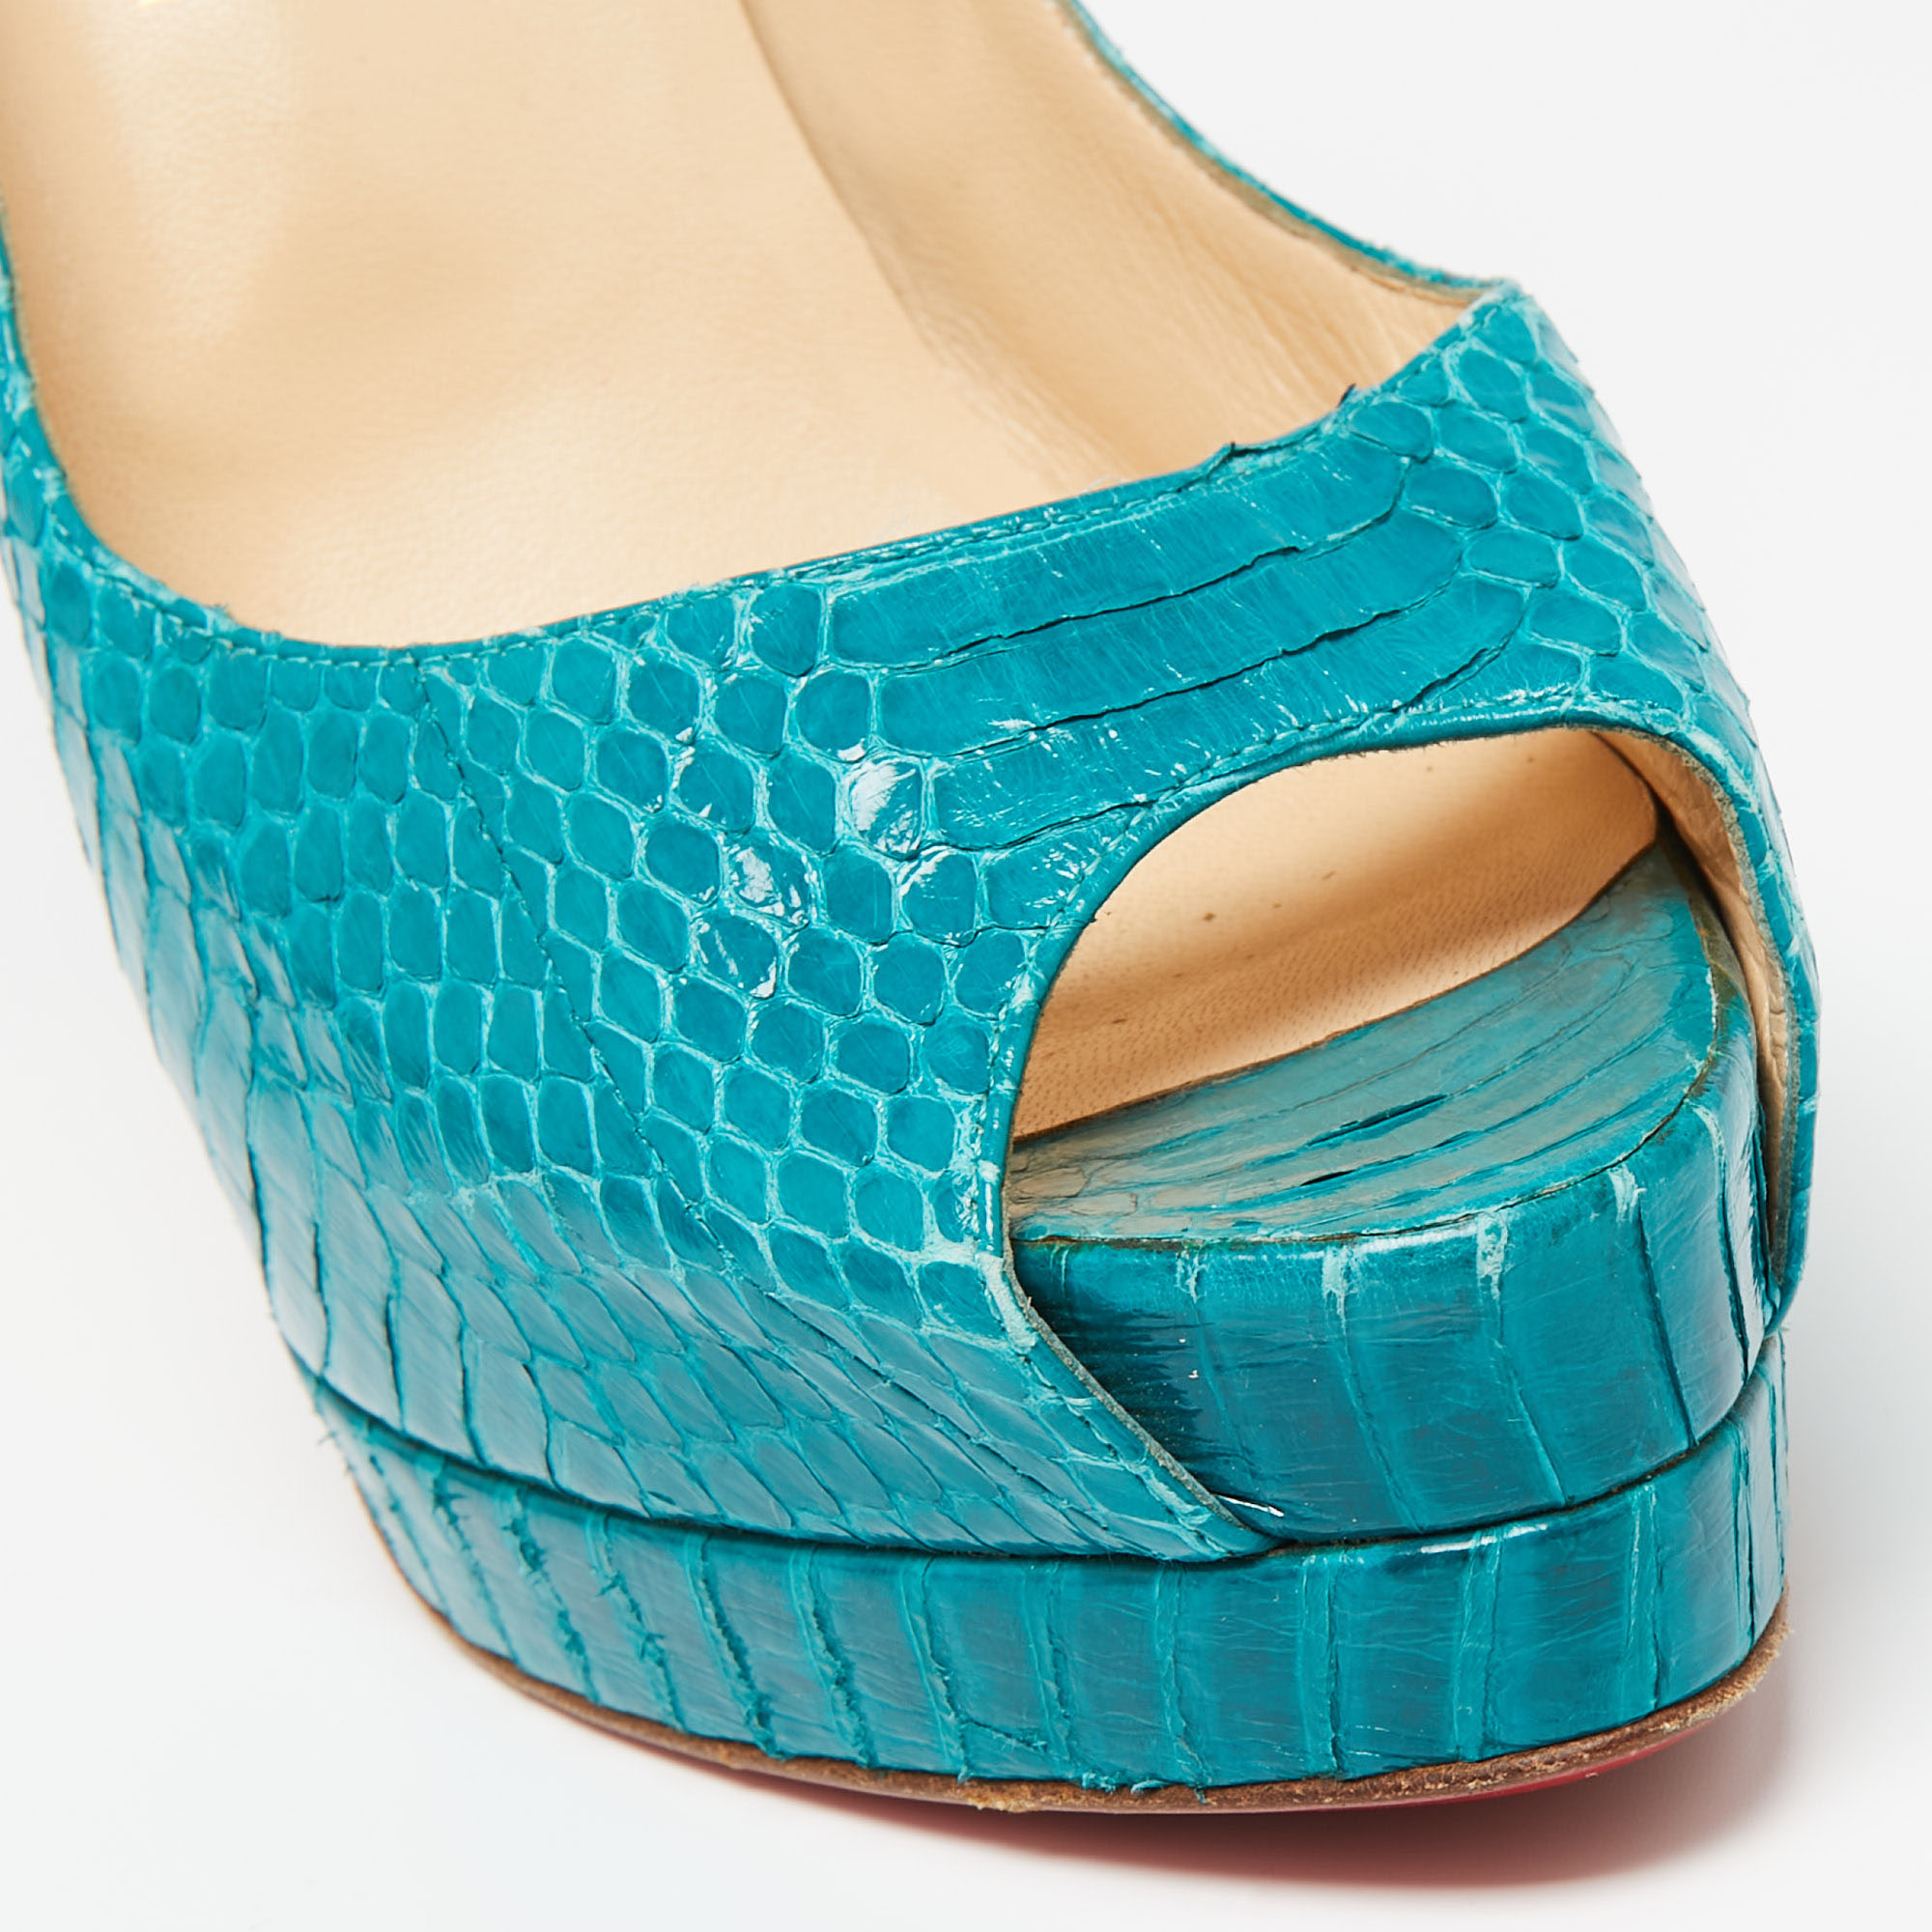 Christian Louboutin Turquoise Python Leather Altadama Peep-Toe Pumps Size 39.5